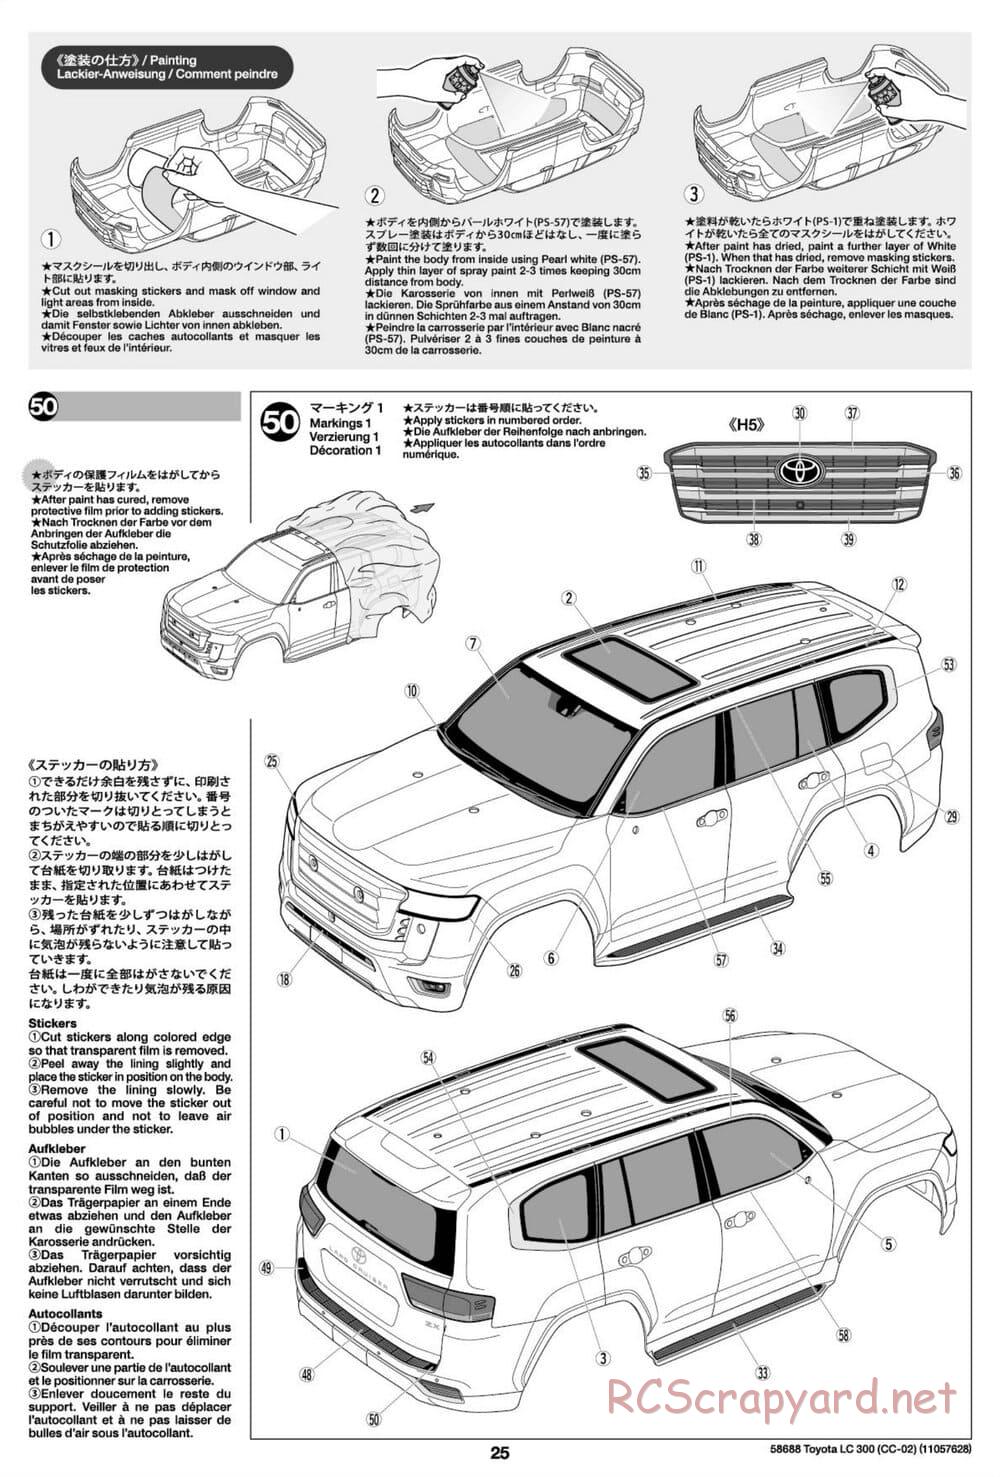 Tamiya - Toyota Land Cruiser 300 - CC-02 Chassis - Manual - Page 25